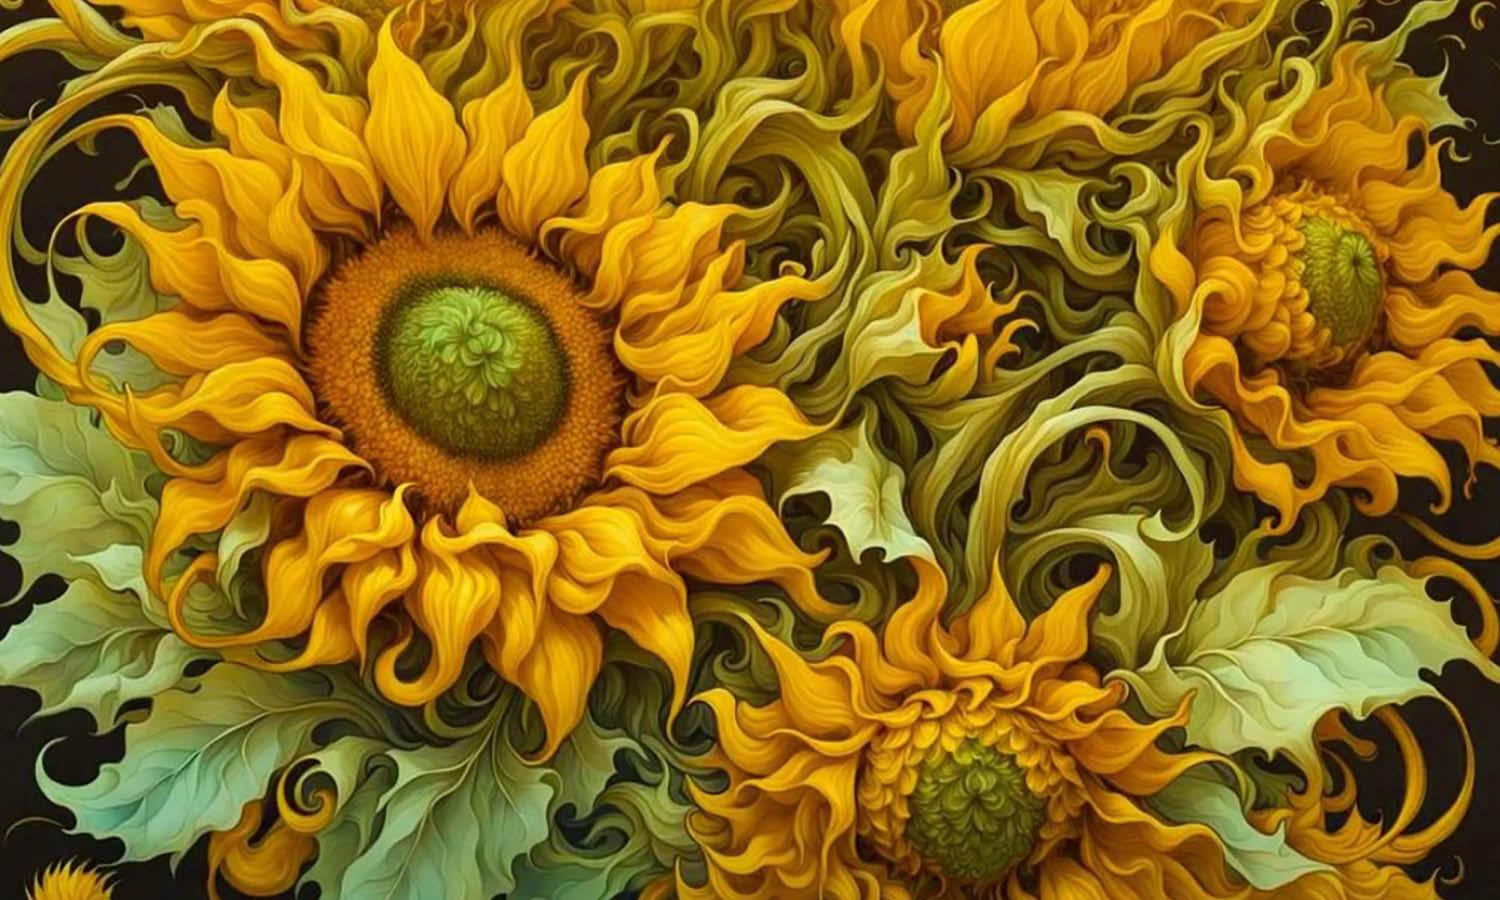 30 Best Sunflower Illustration Ideas You Should Check - Kreafolk